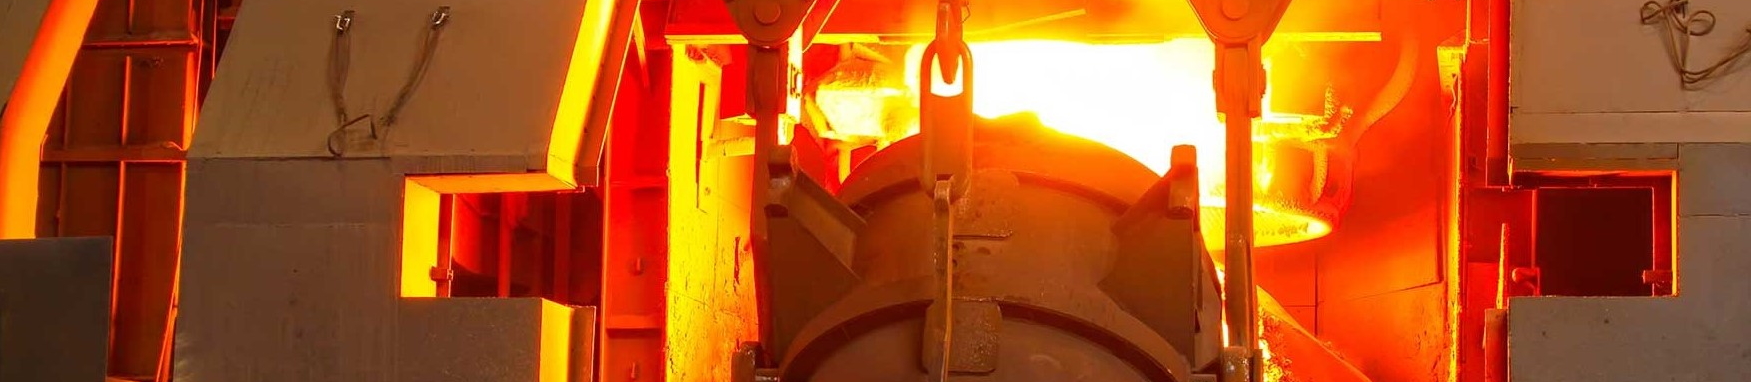 Converter furnace iron & steel